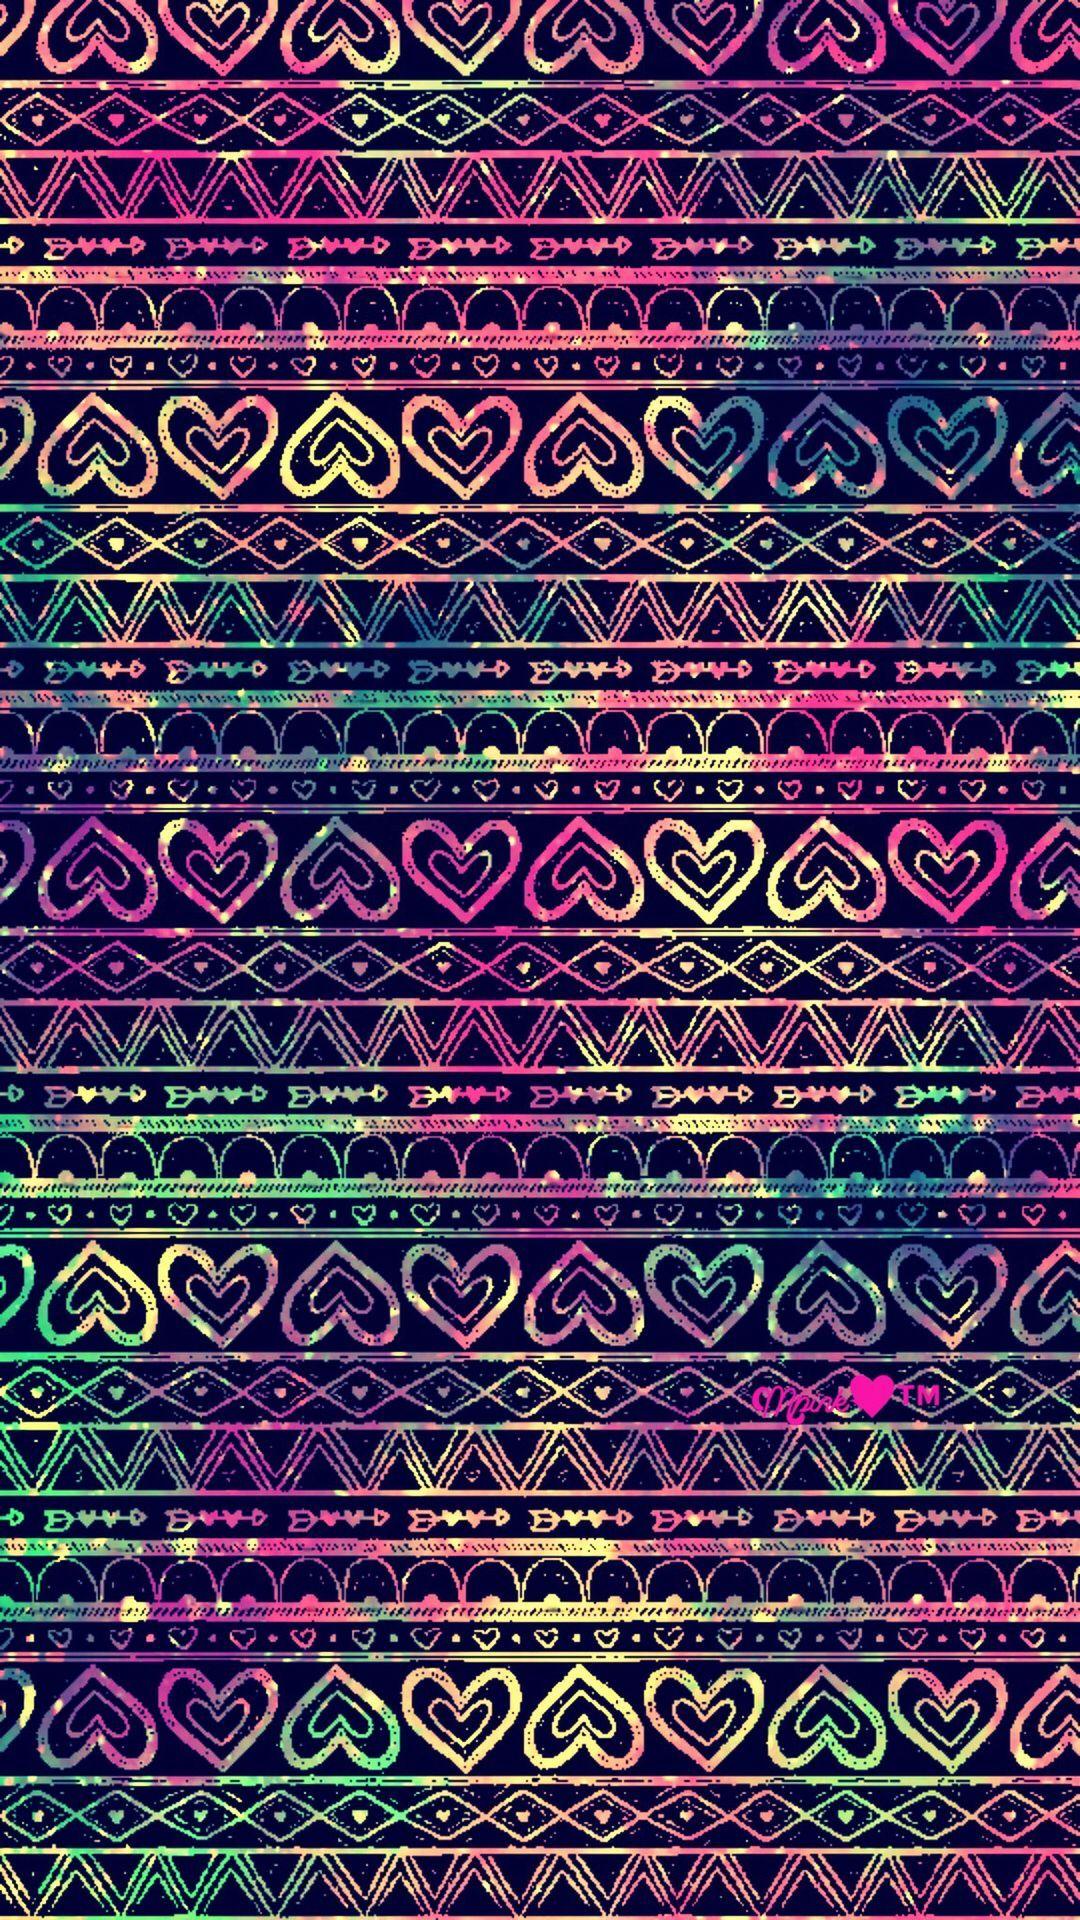 Midnight Hearts Galaxy Wallpaper #androidwallpaper #iphonewallpaper